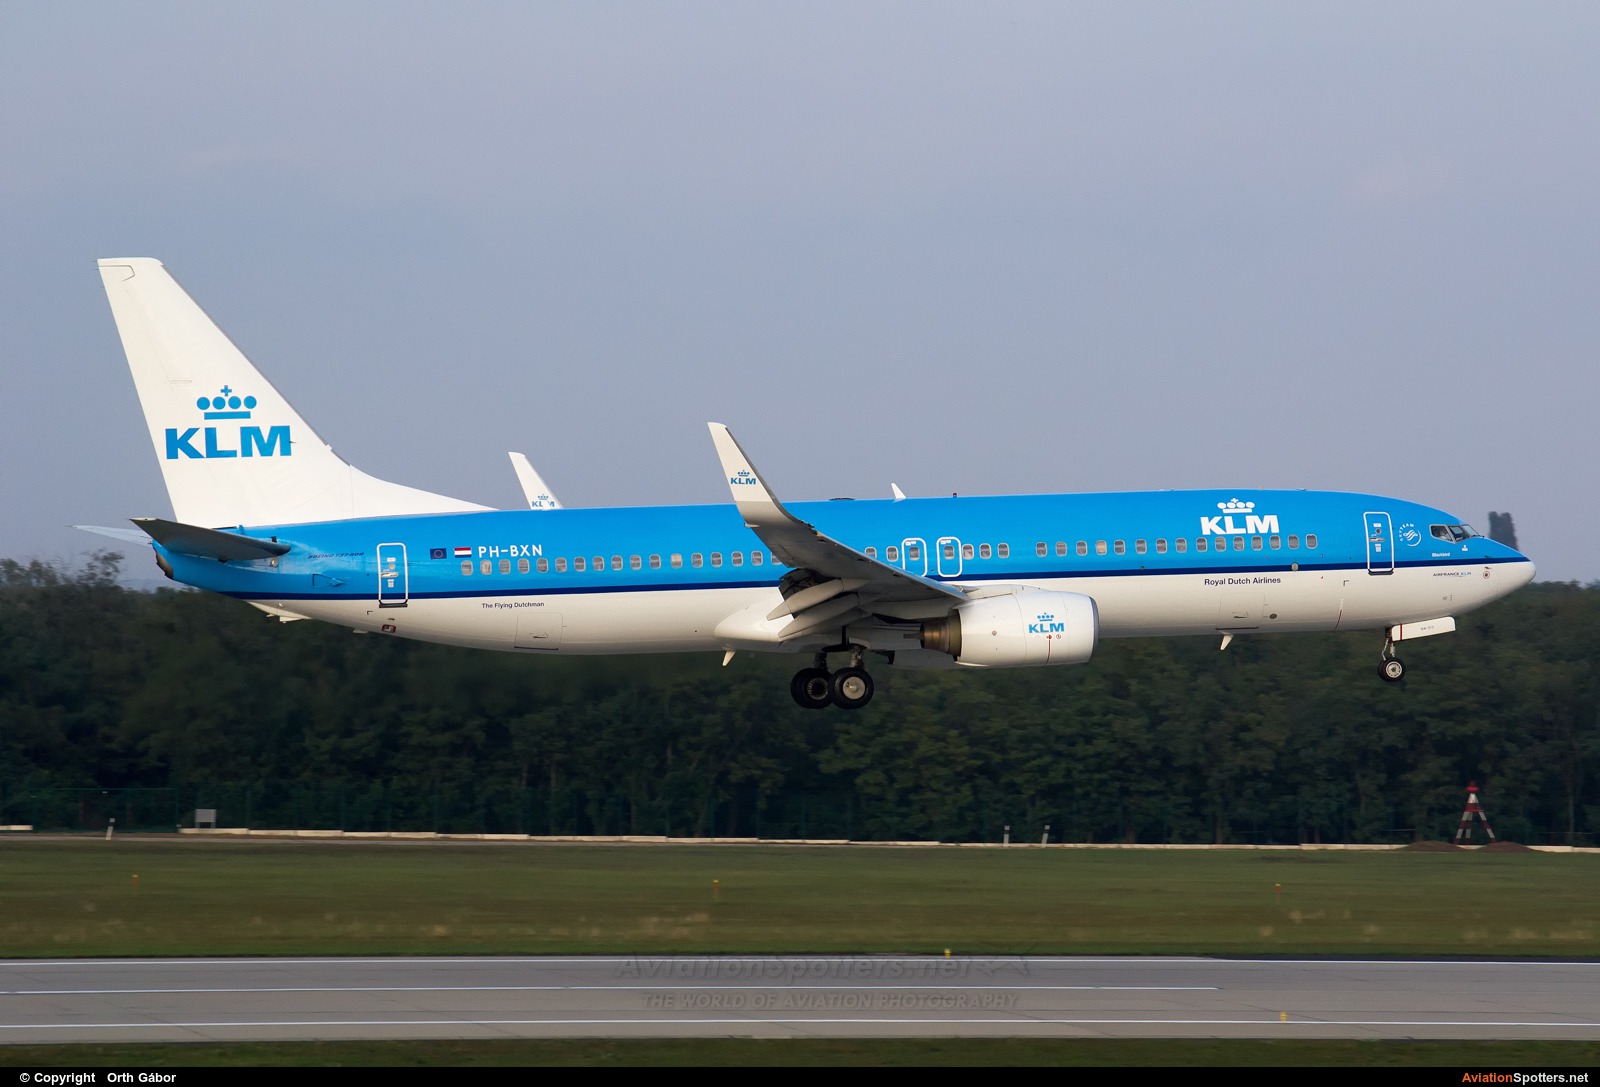 KLM  -  737-800  (PH-BXN) By Orth Gábor (Roodkop)